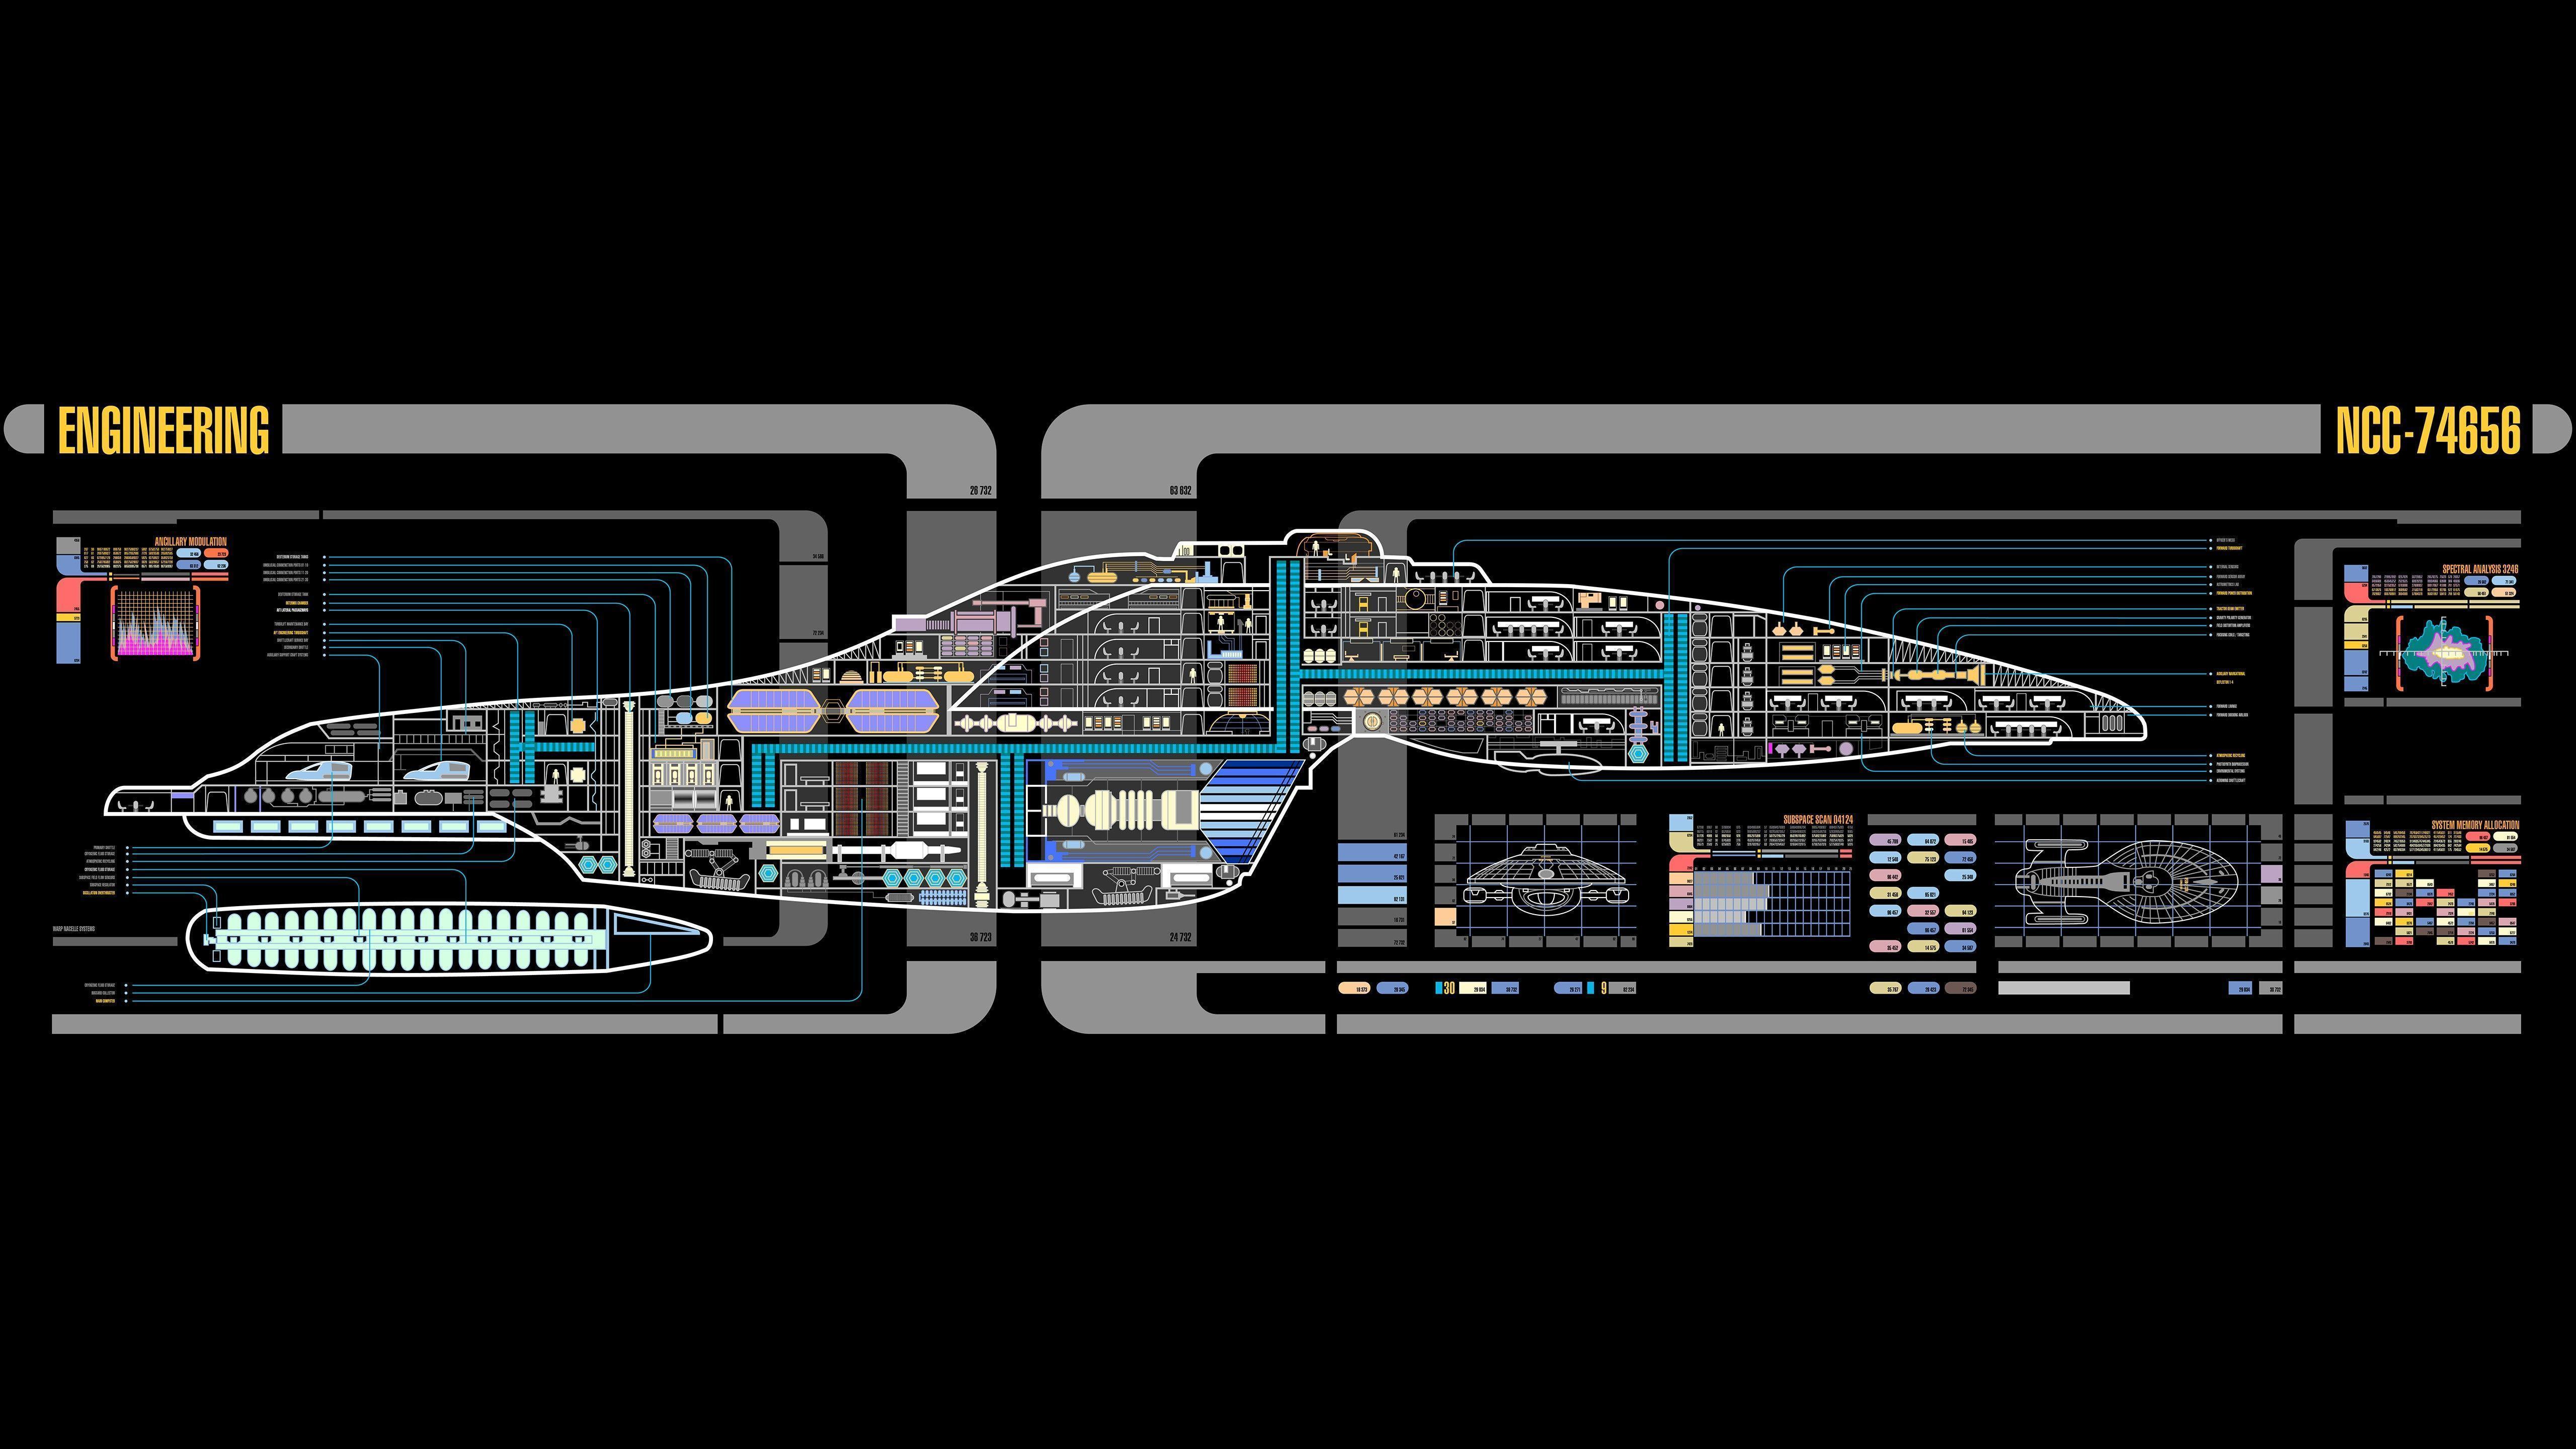 Voyager Star Trek